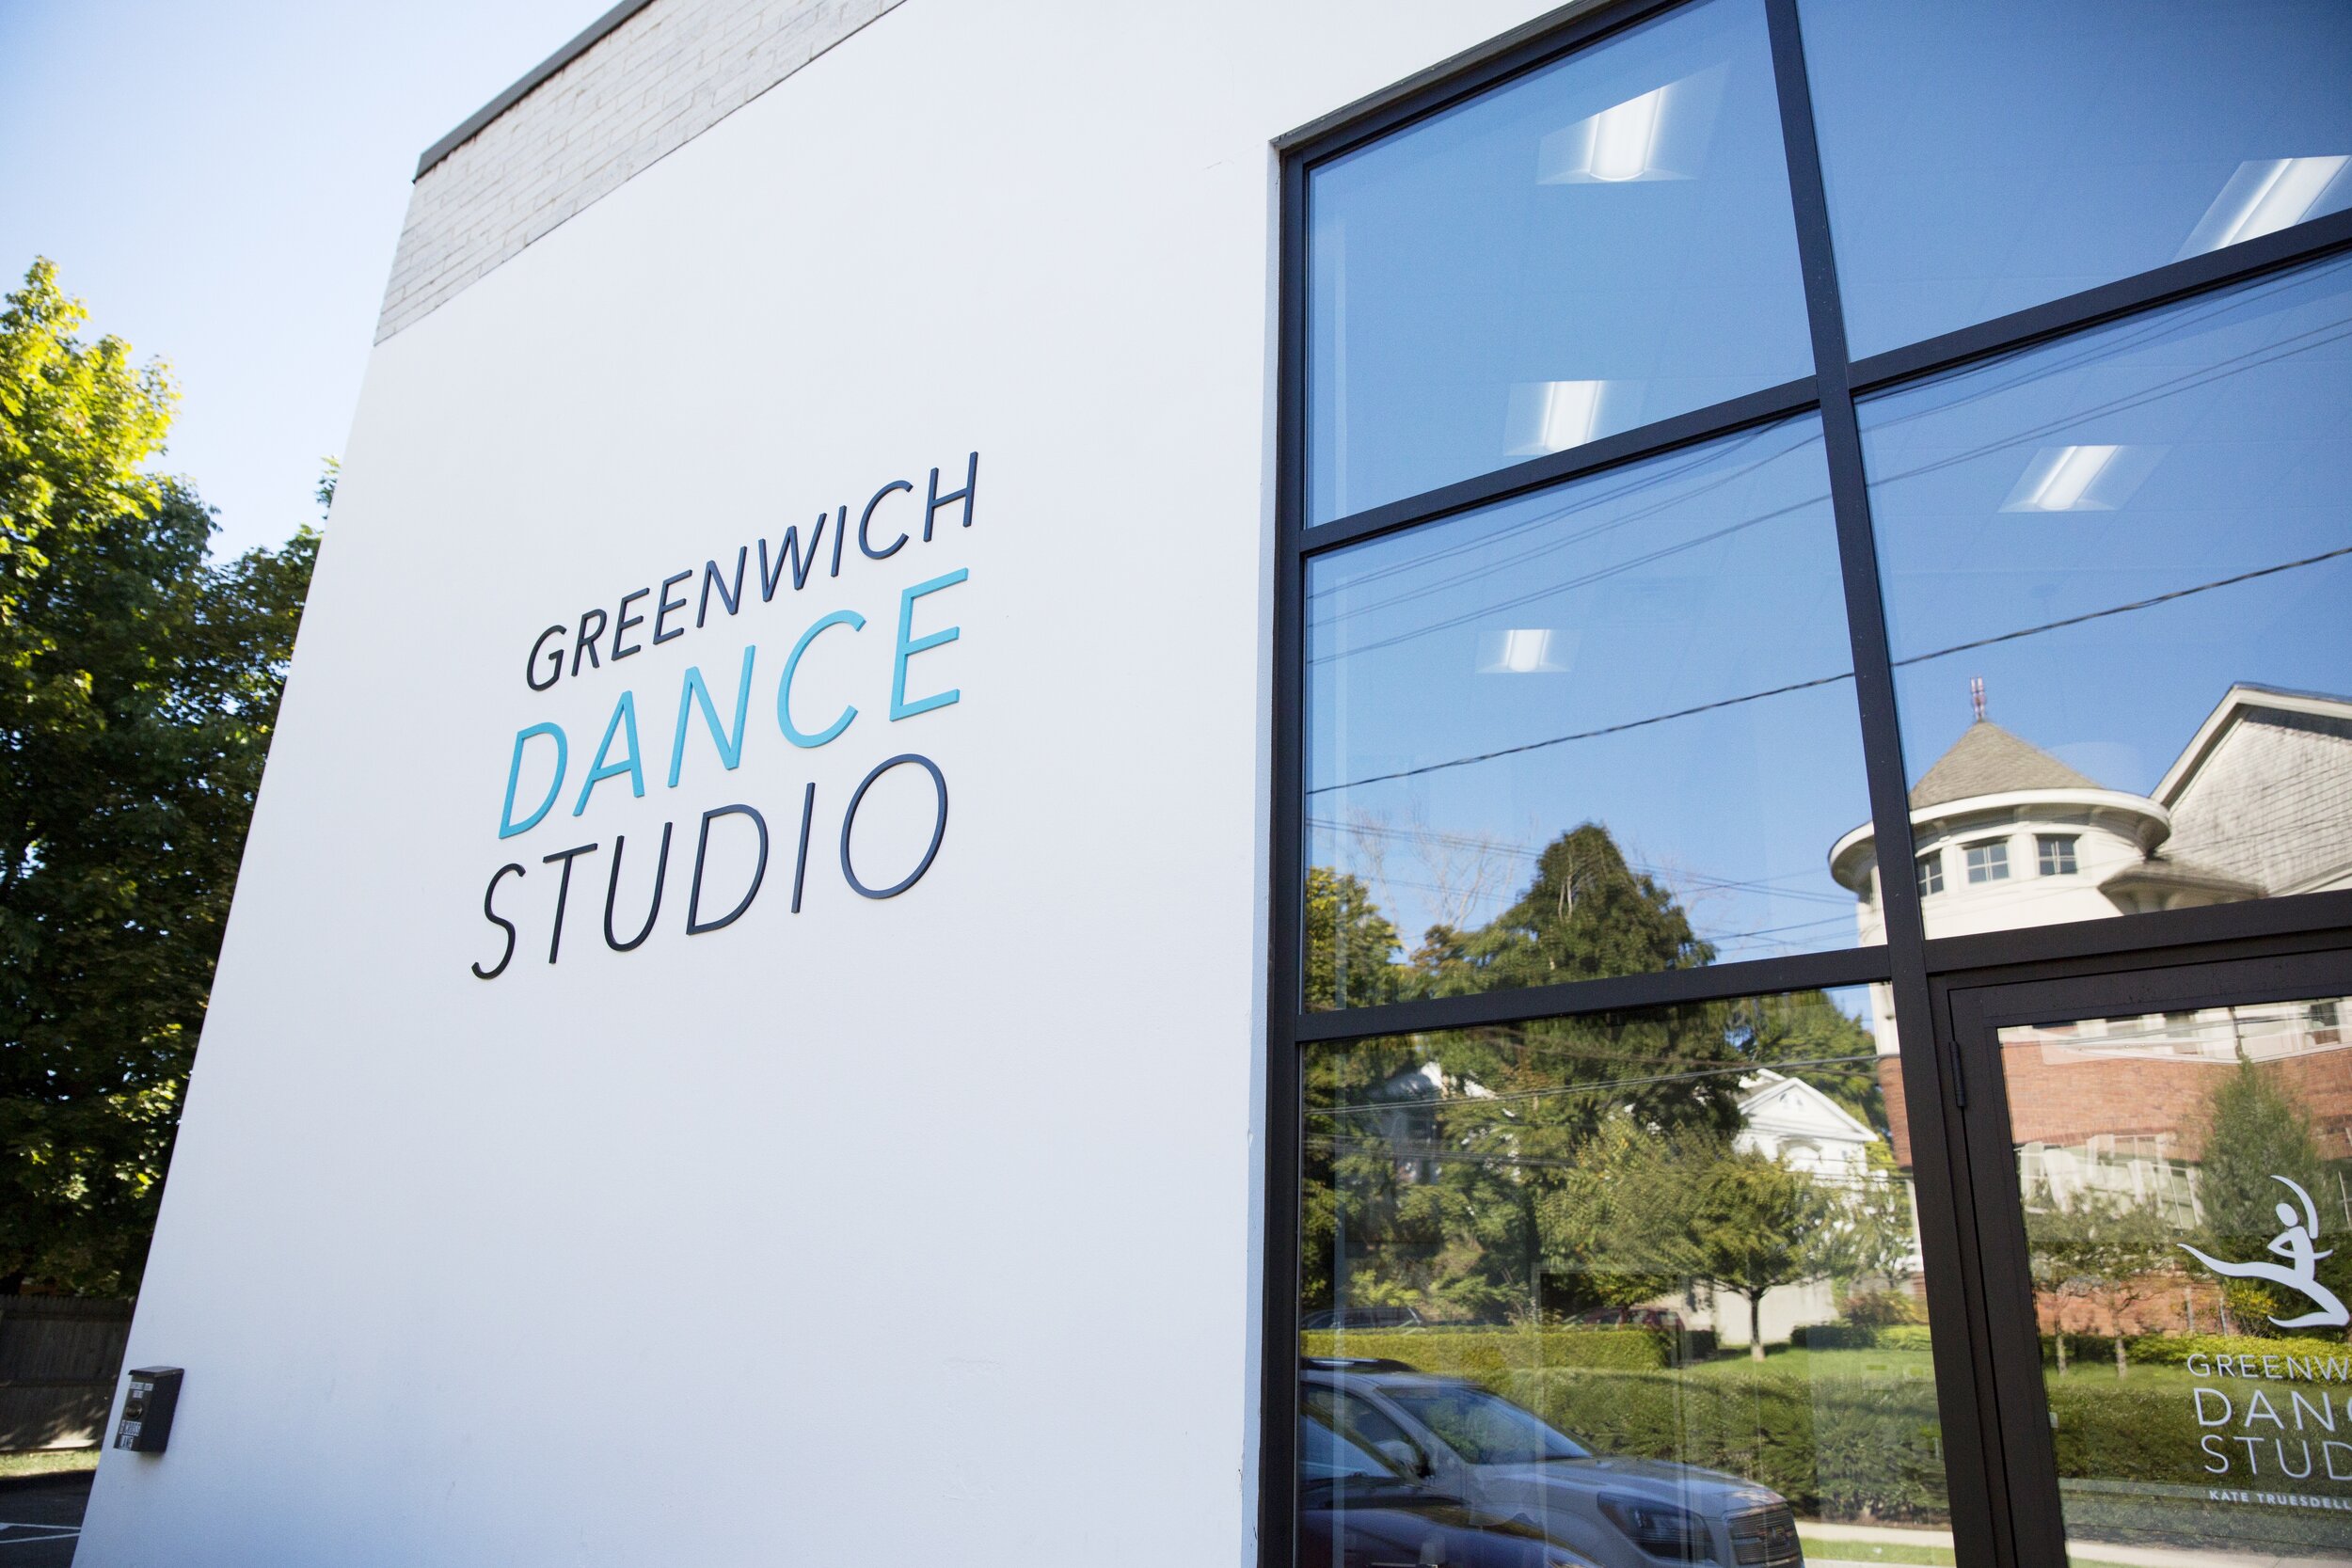 General 2 — Greenwich Dance Studio